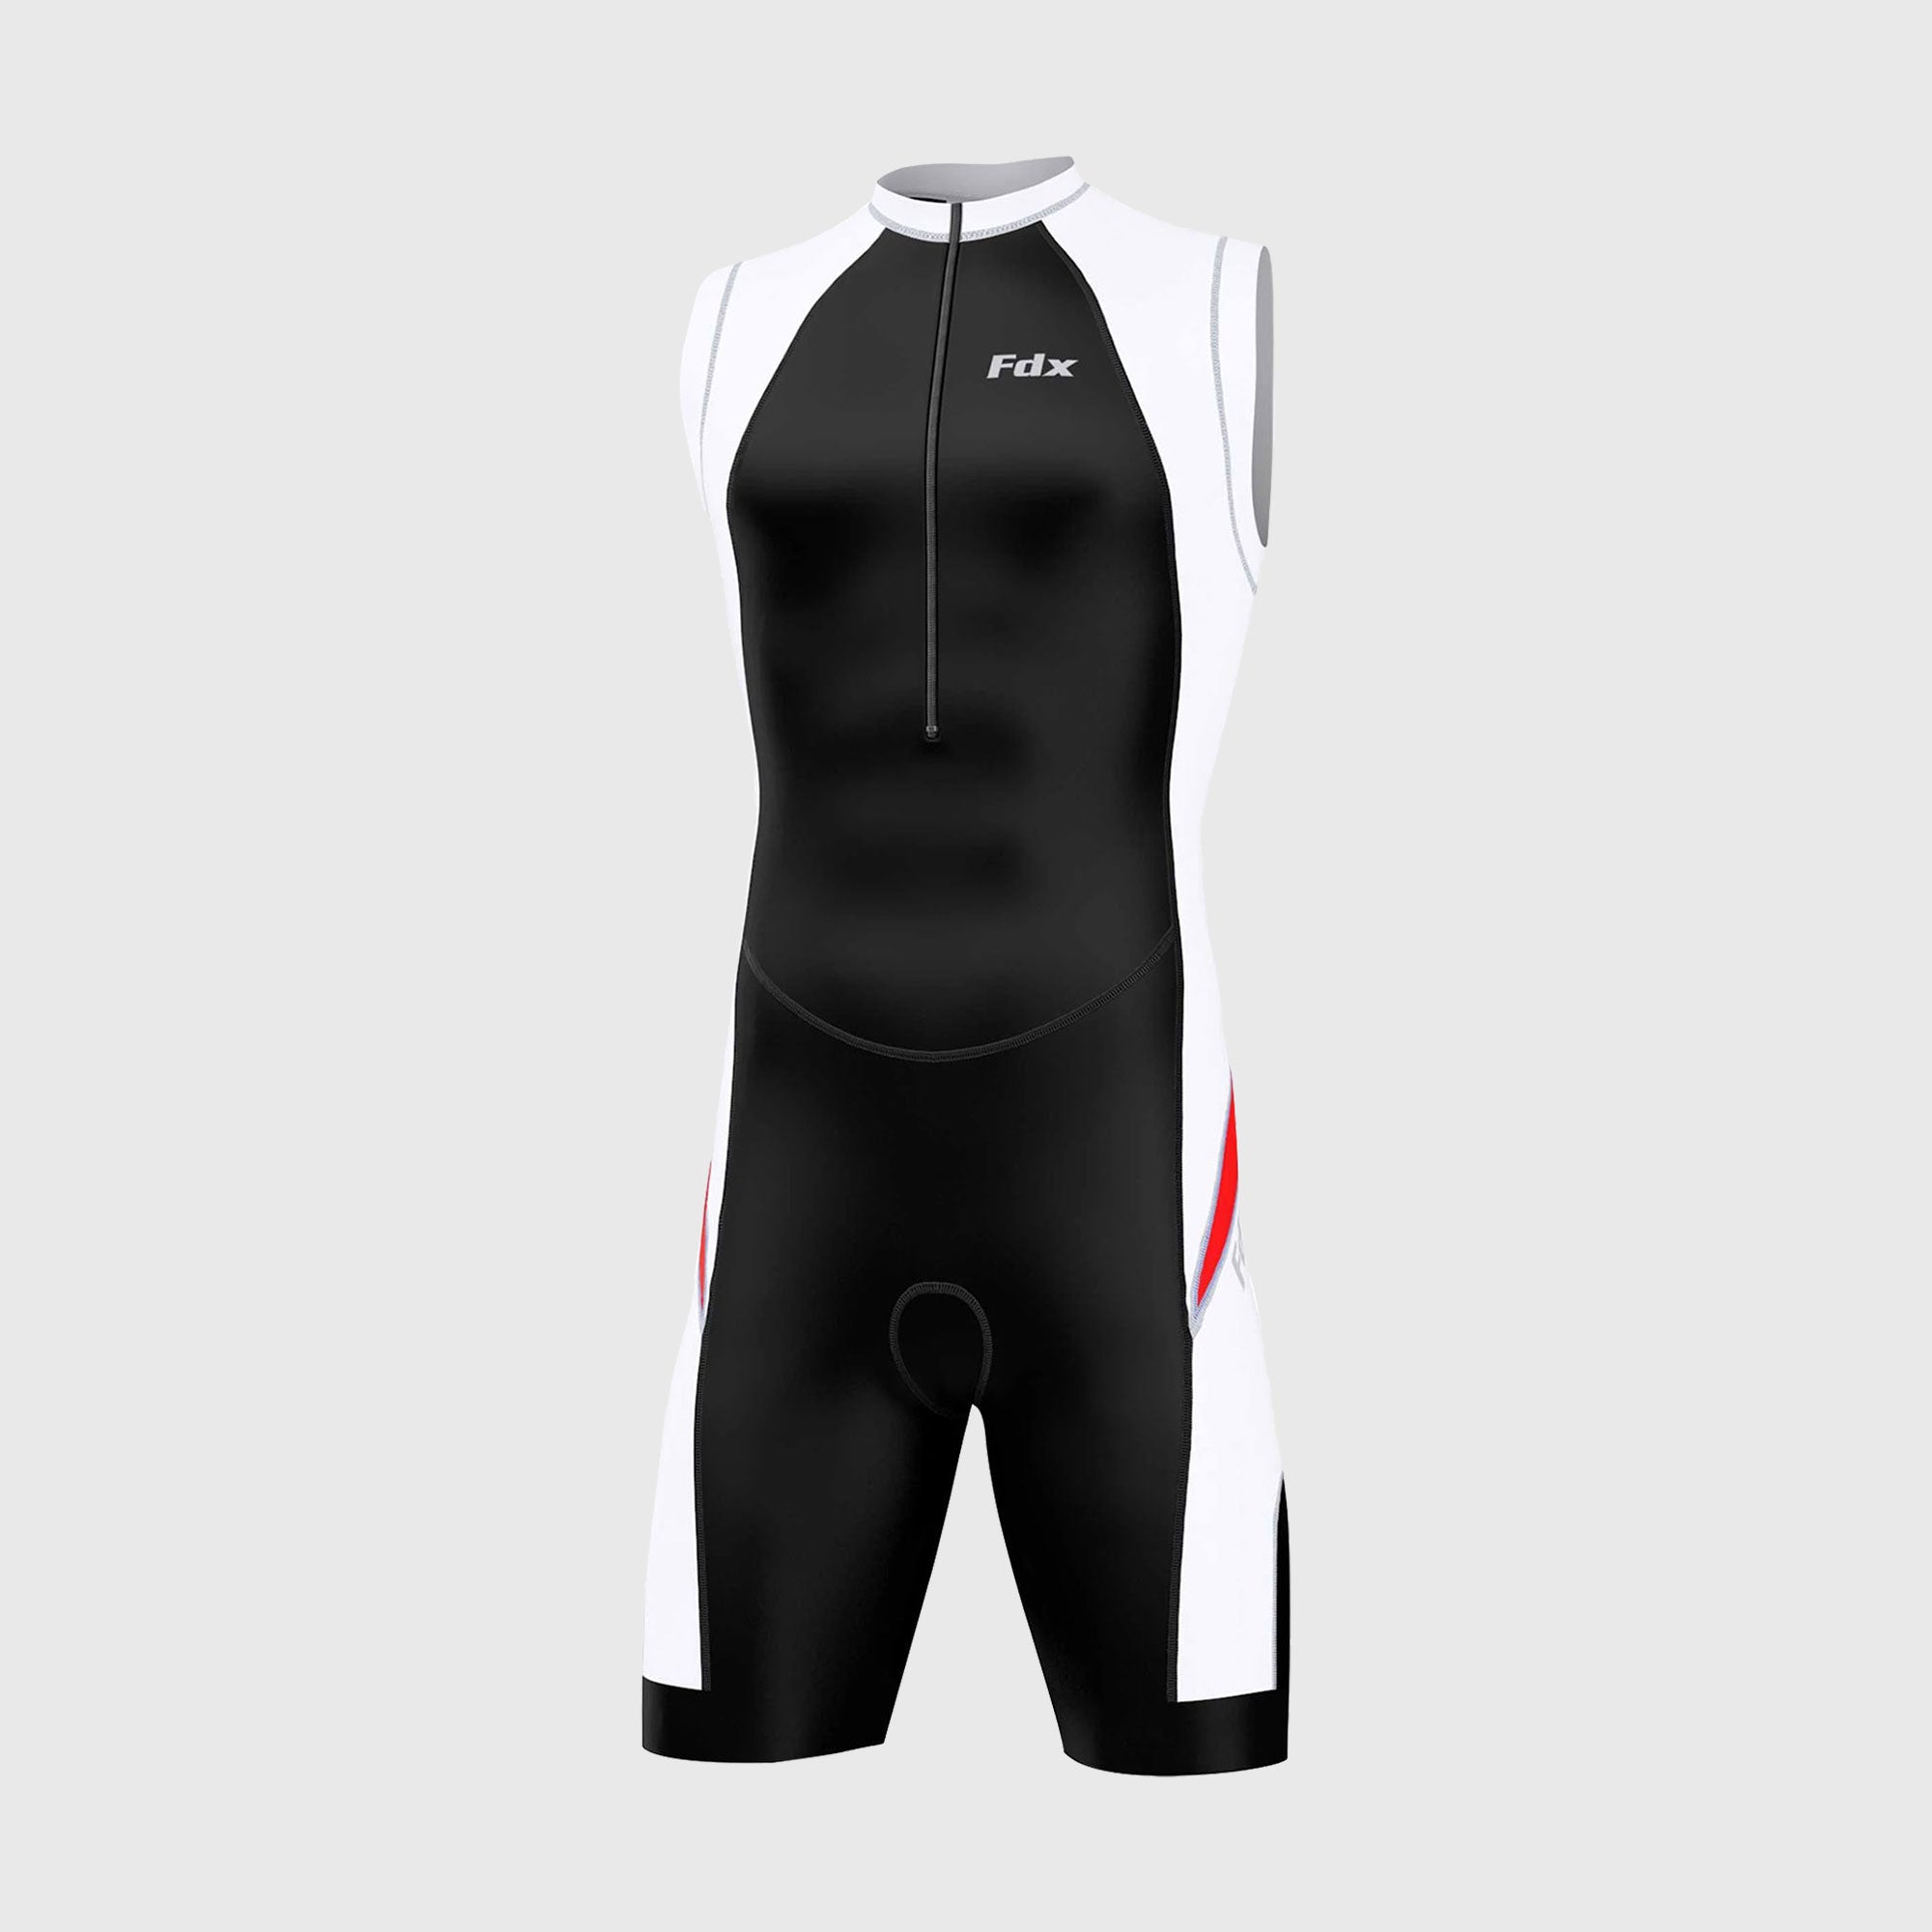 Fdx Mens Black & Red Sleeveless Gel Padded Triathlon / Skin Suit for Summer Cycling Wear, Runnung & Swimming Half Zip - Zion